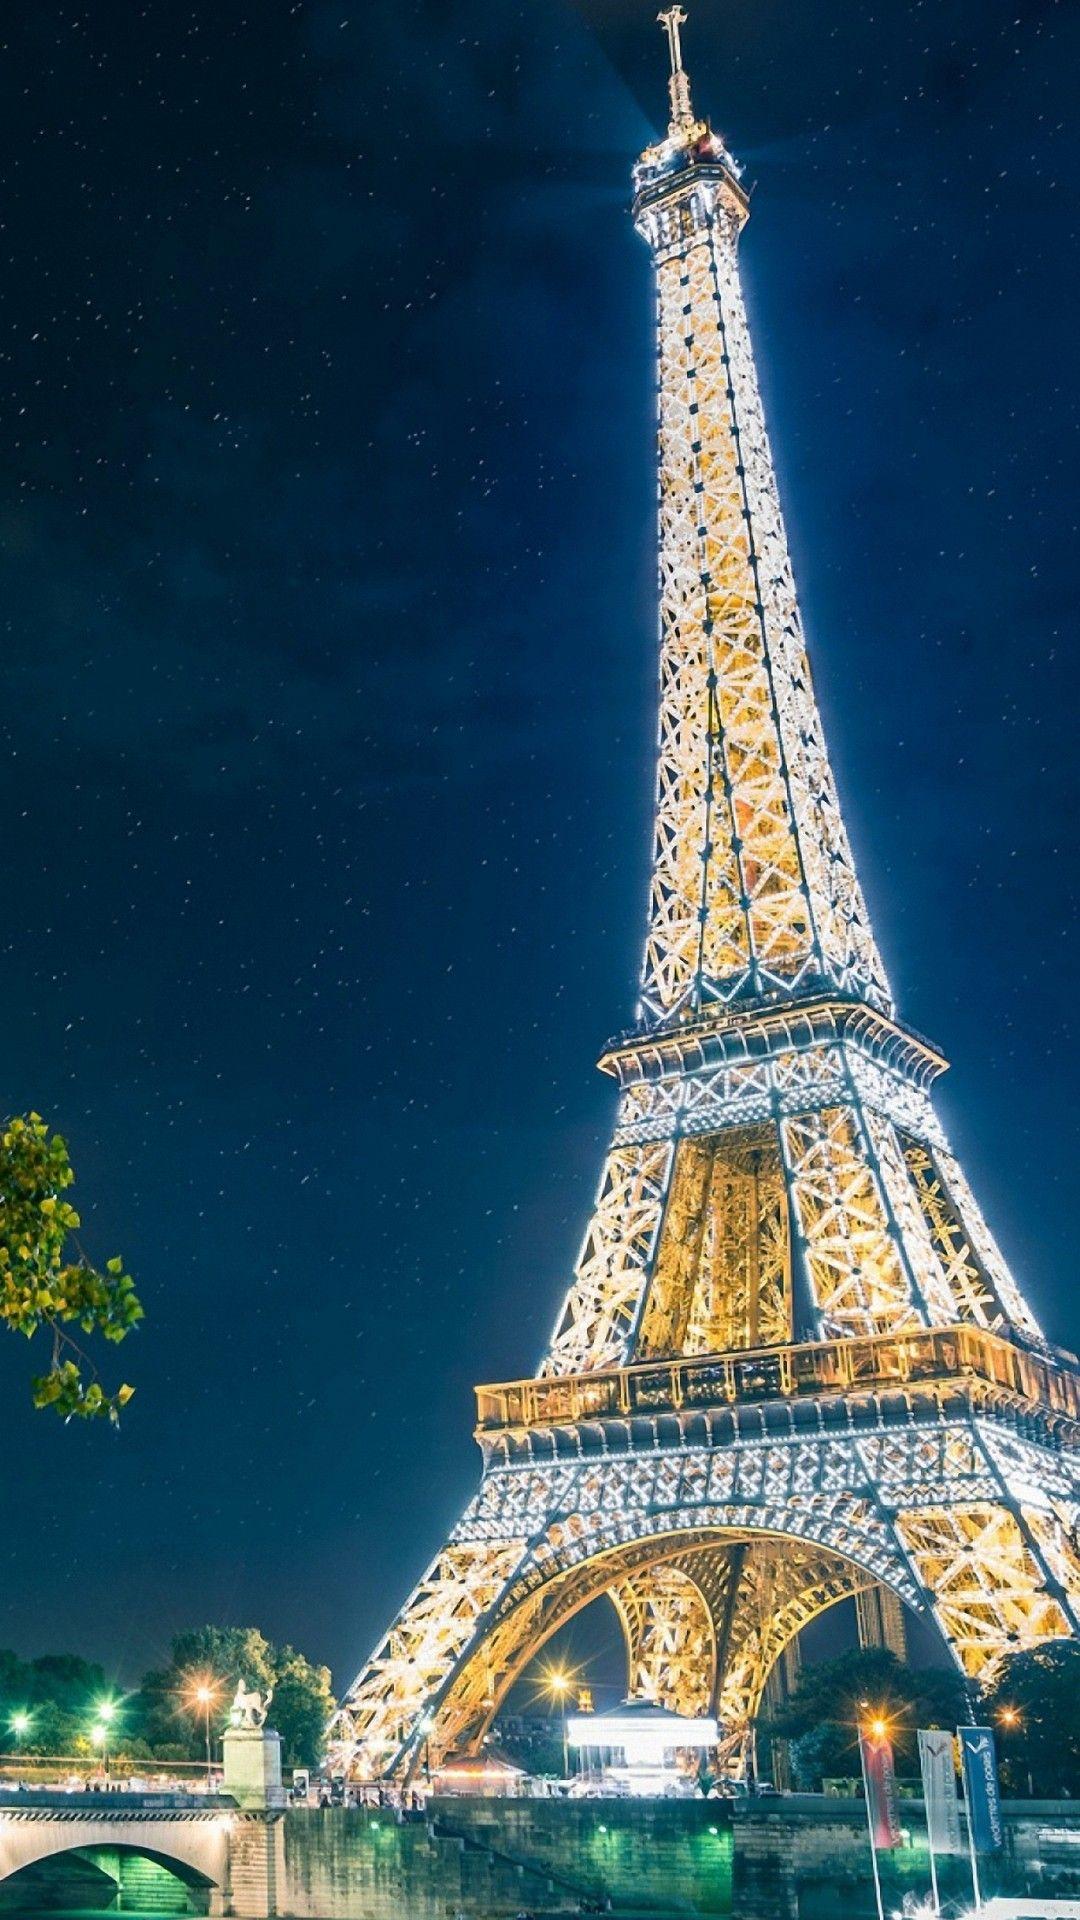 Eiffel Tower at night. iPhone Wallpaper. Eiffel tower at night, Eiffel tower, Paris